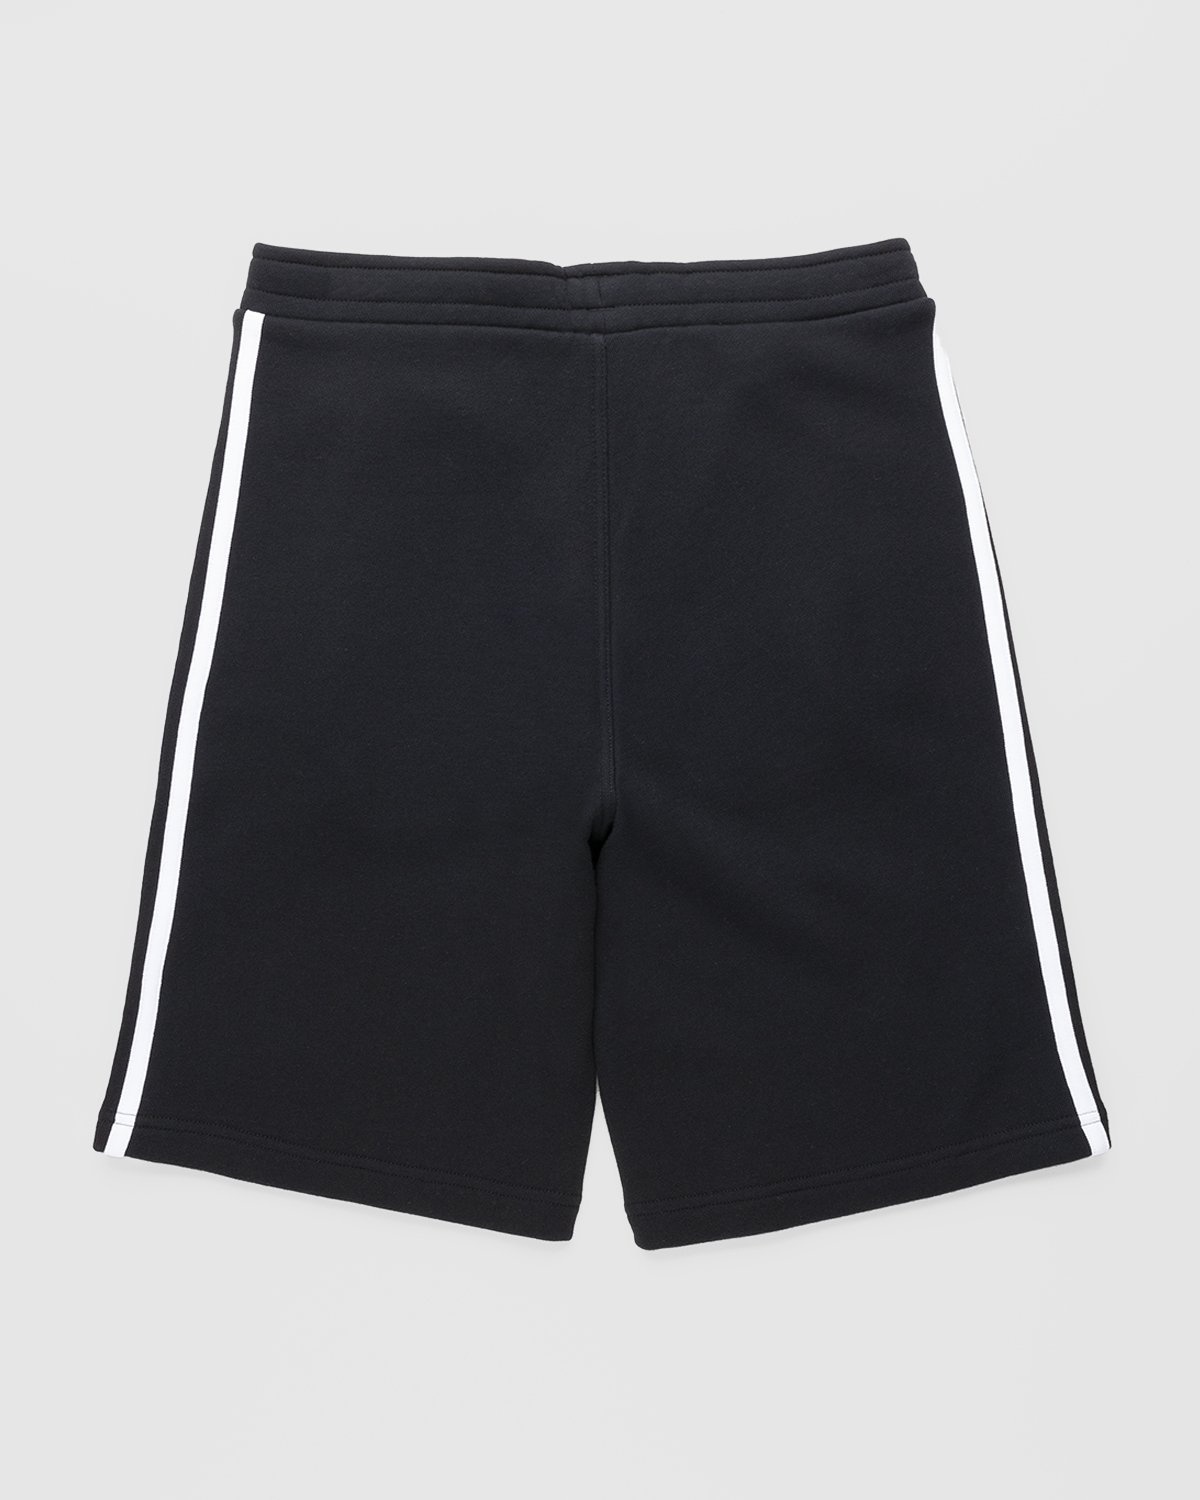 Adidas – 3 Stripe Short Black - Shorts - Black - Image 2